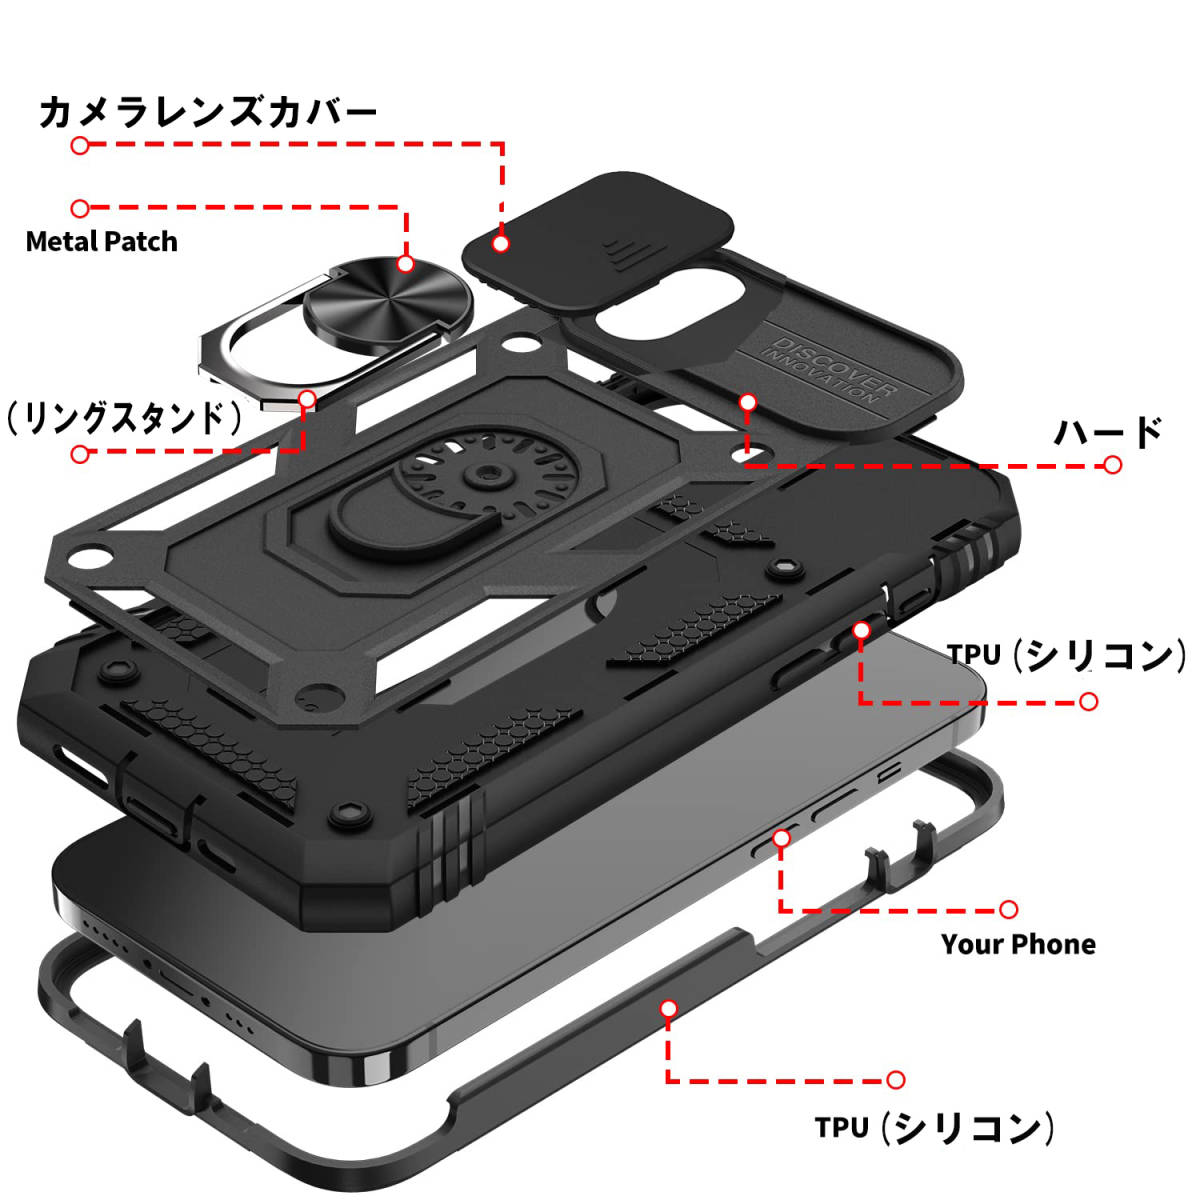 G在庫処分 黒 iPhone XR ケース 本体 カバー 指リング 画面 保護 アイフォン 米軍 衝撃 頑丈 スタンド ホルダー Apple 最強 アップル_画像5